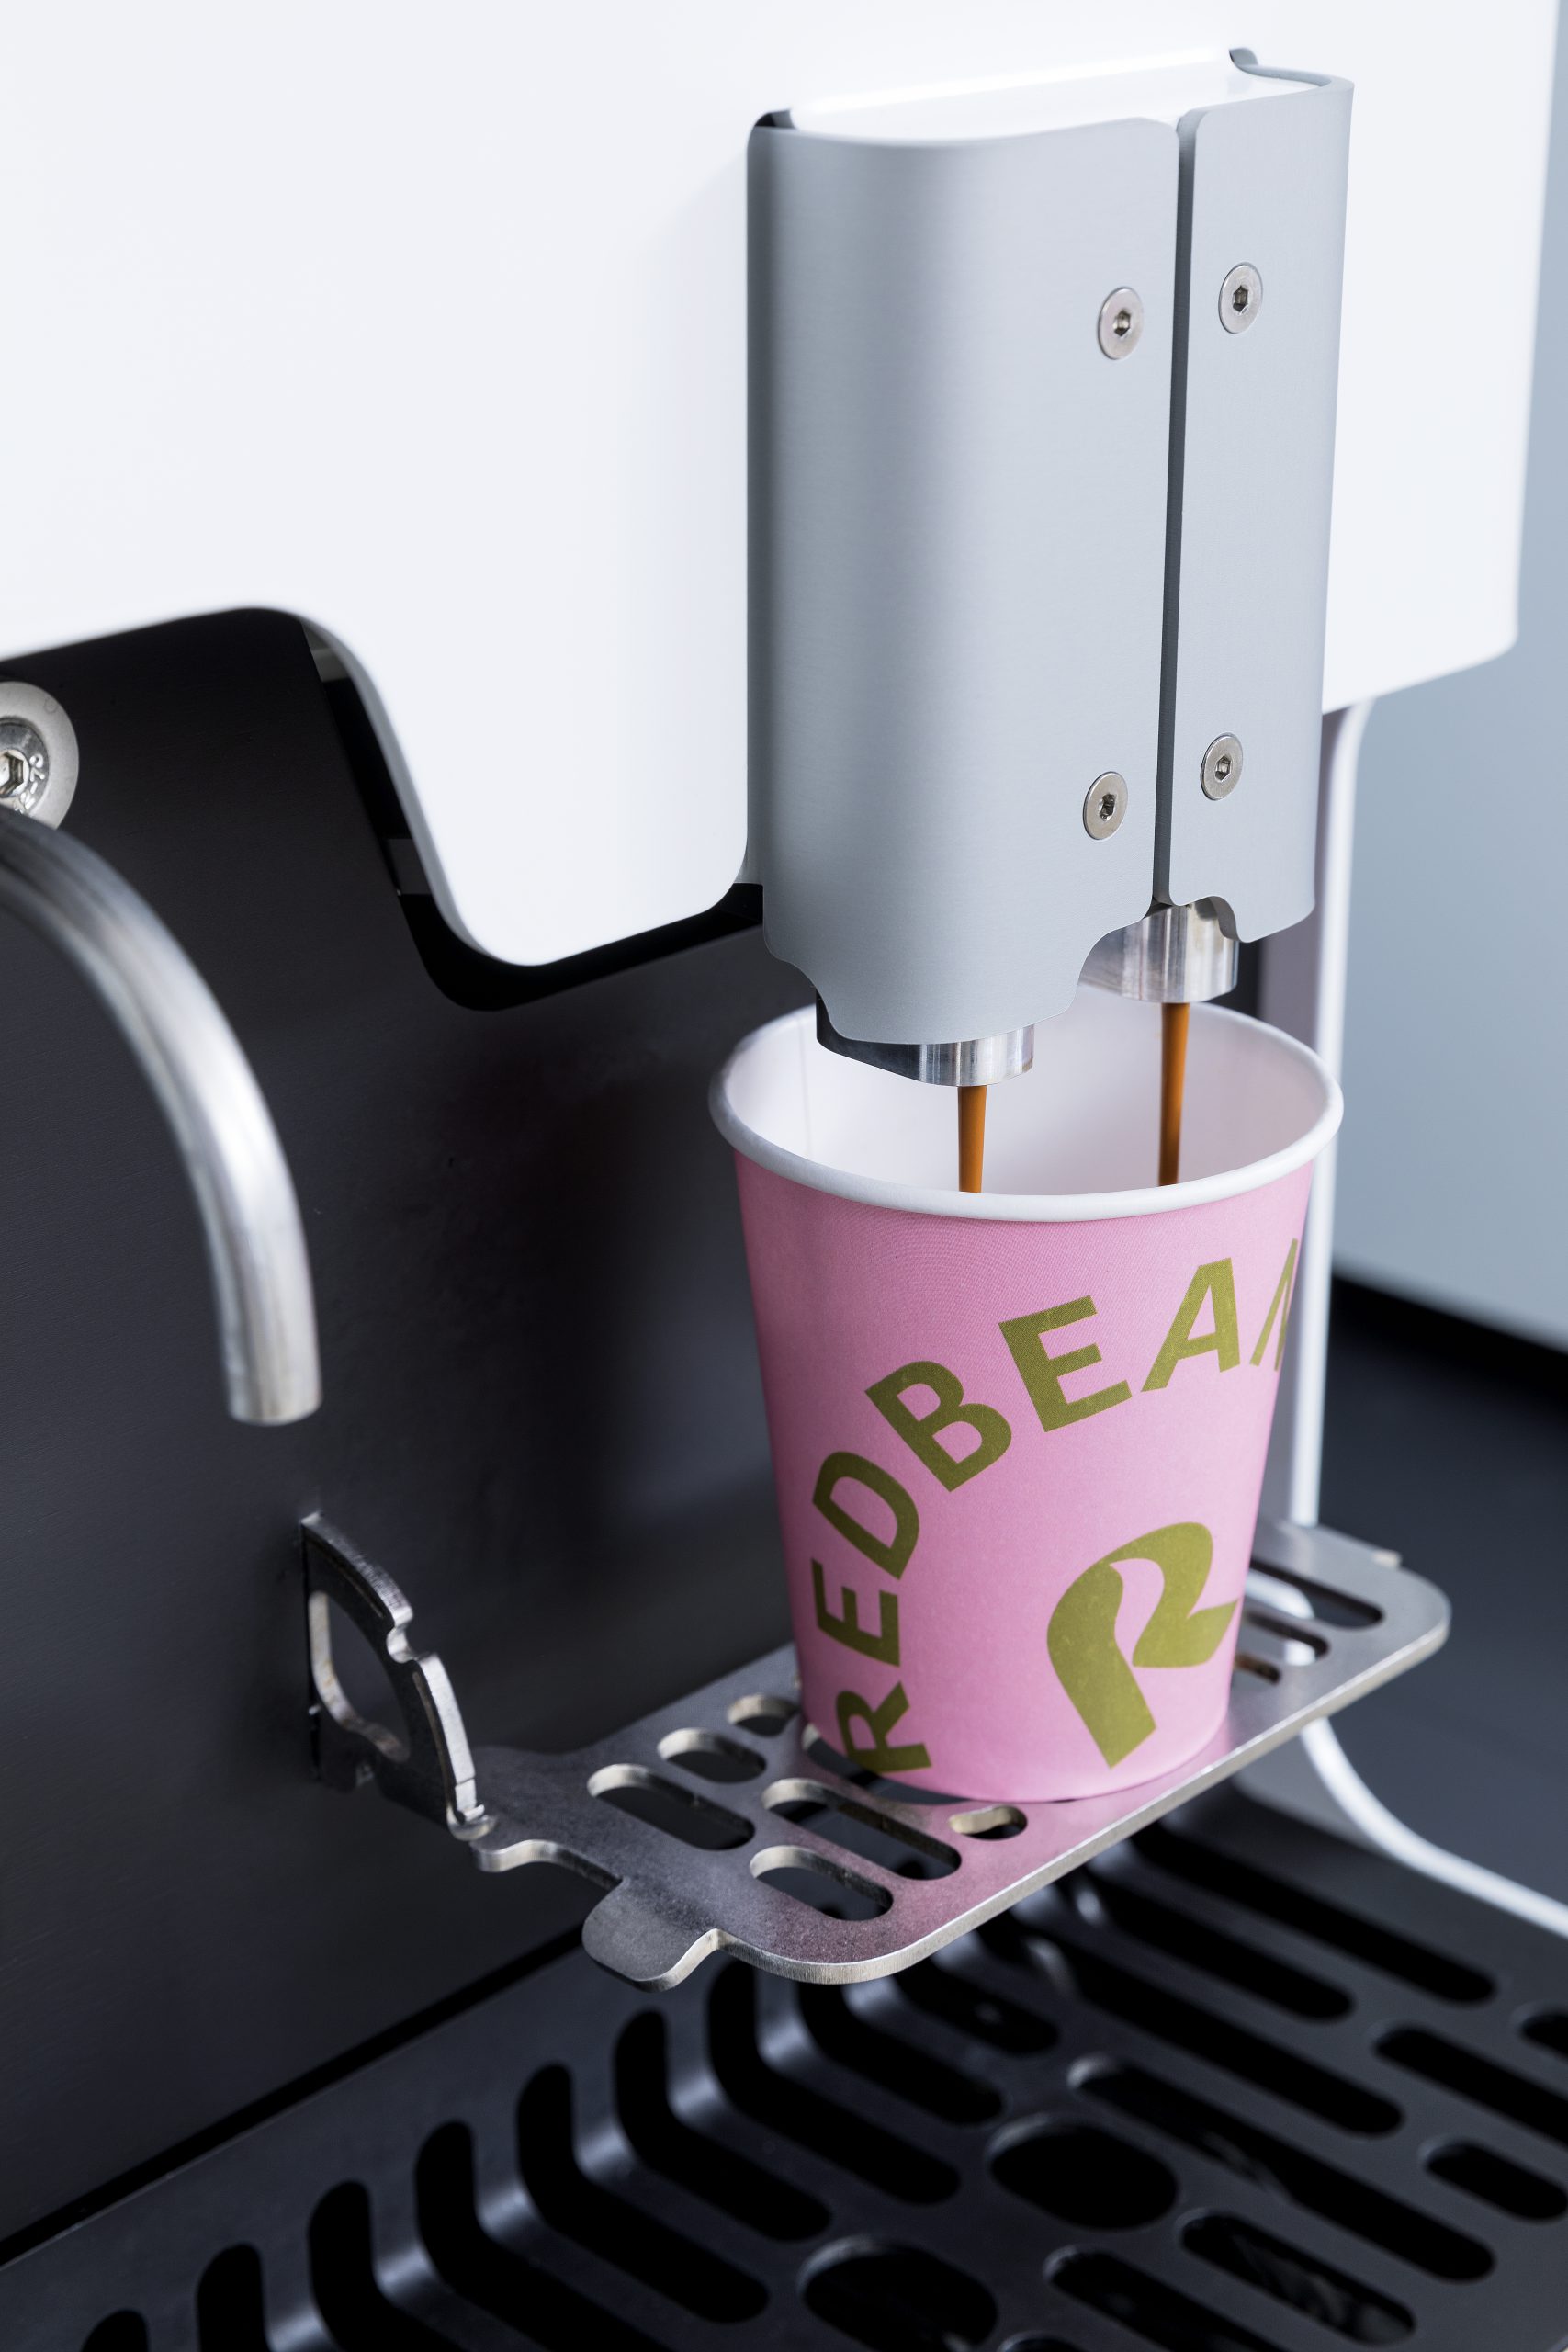 Redbeans Beanmachine XL koffiemachine uitloop | KoffiePartners